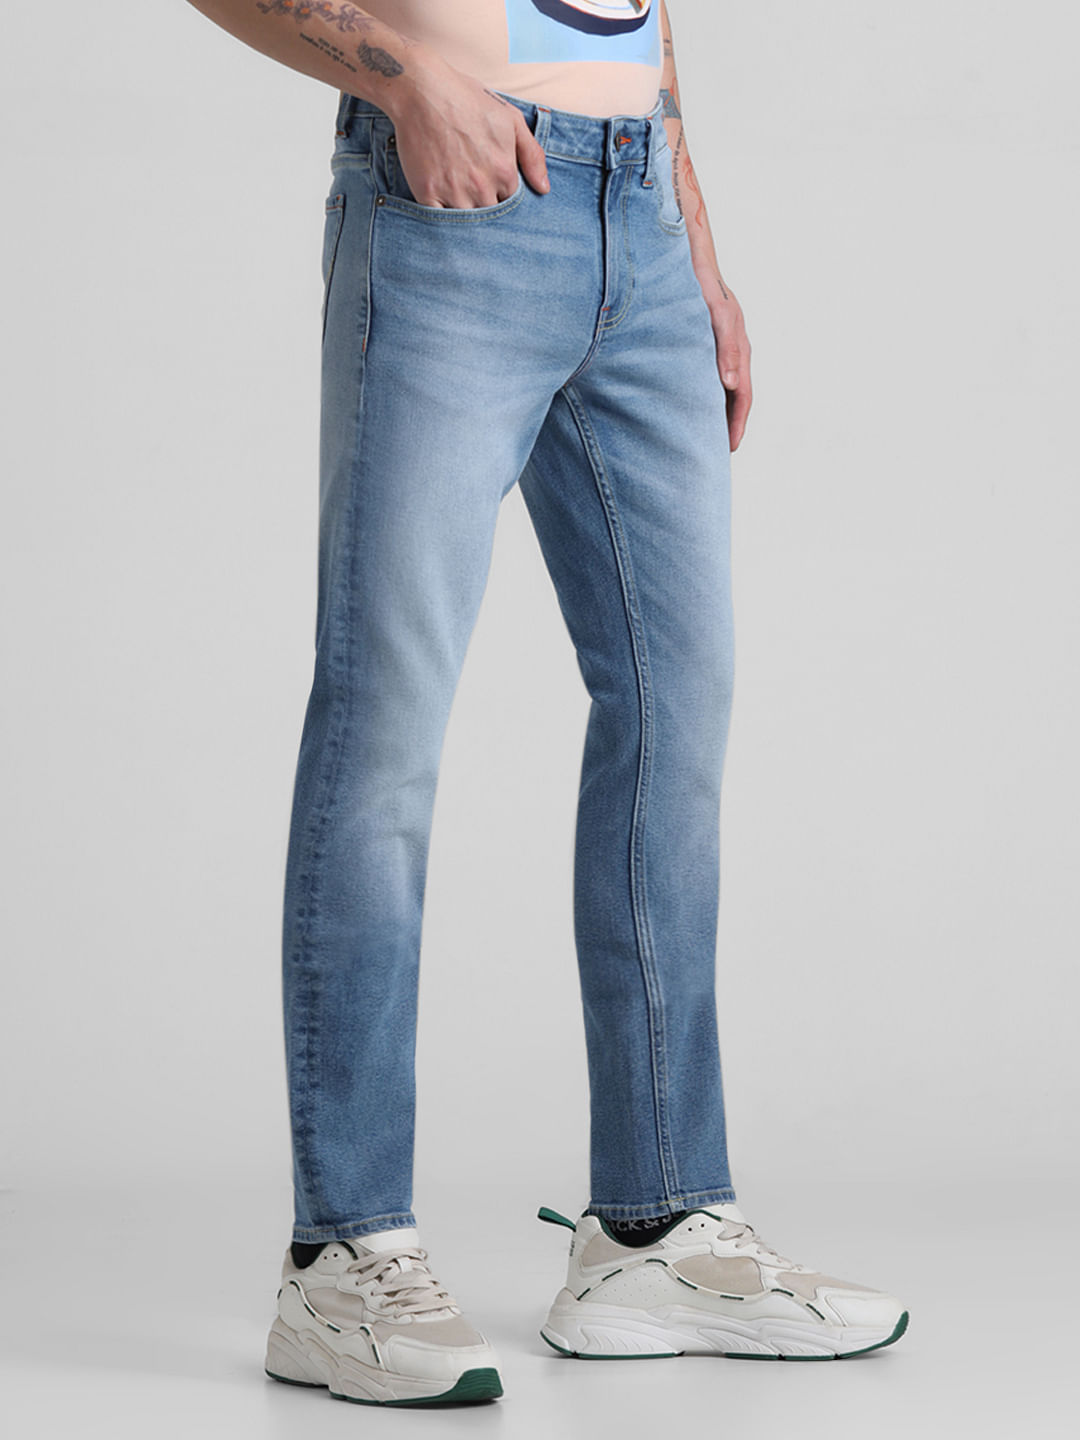 Denim Cargo Jogger Style Jeans Pant For Men & Boys